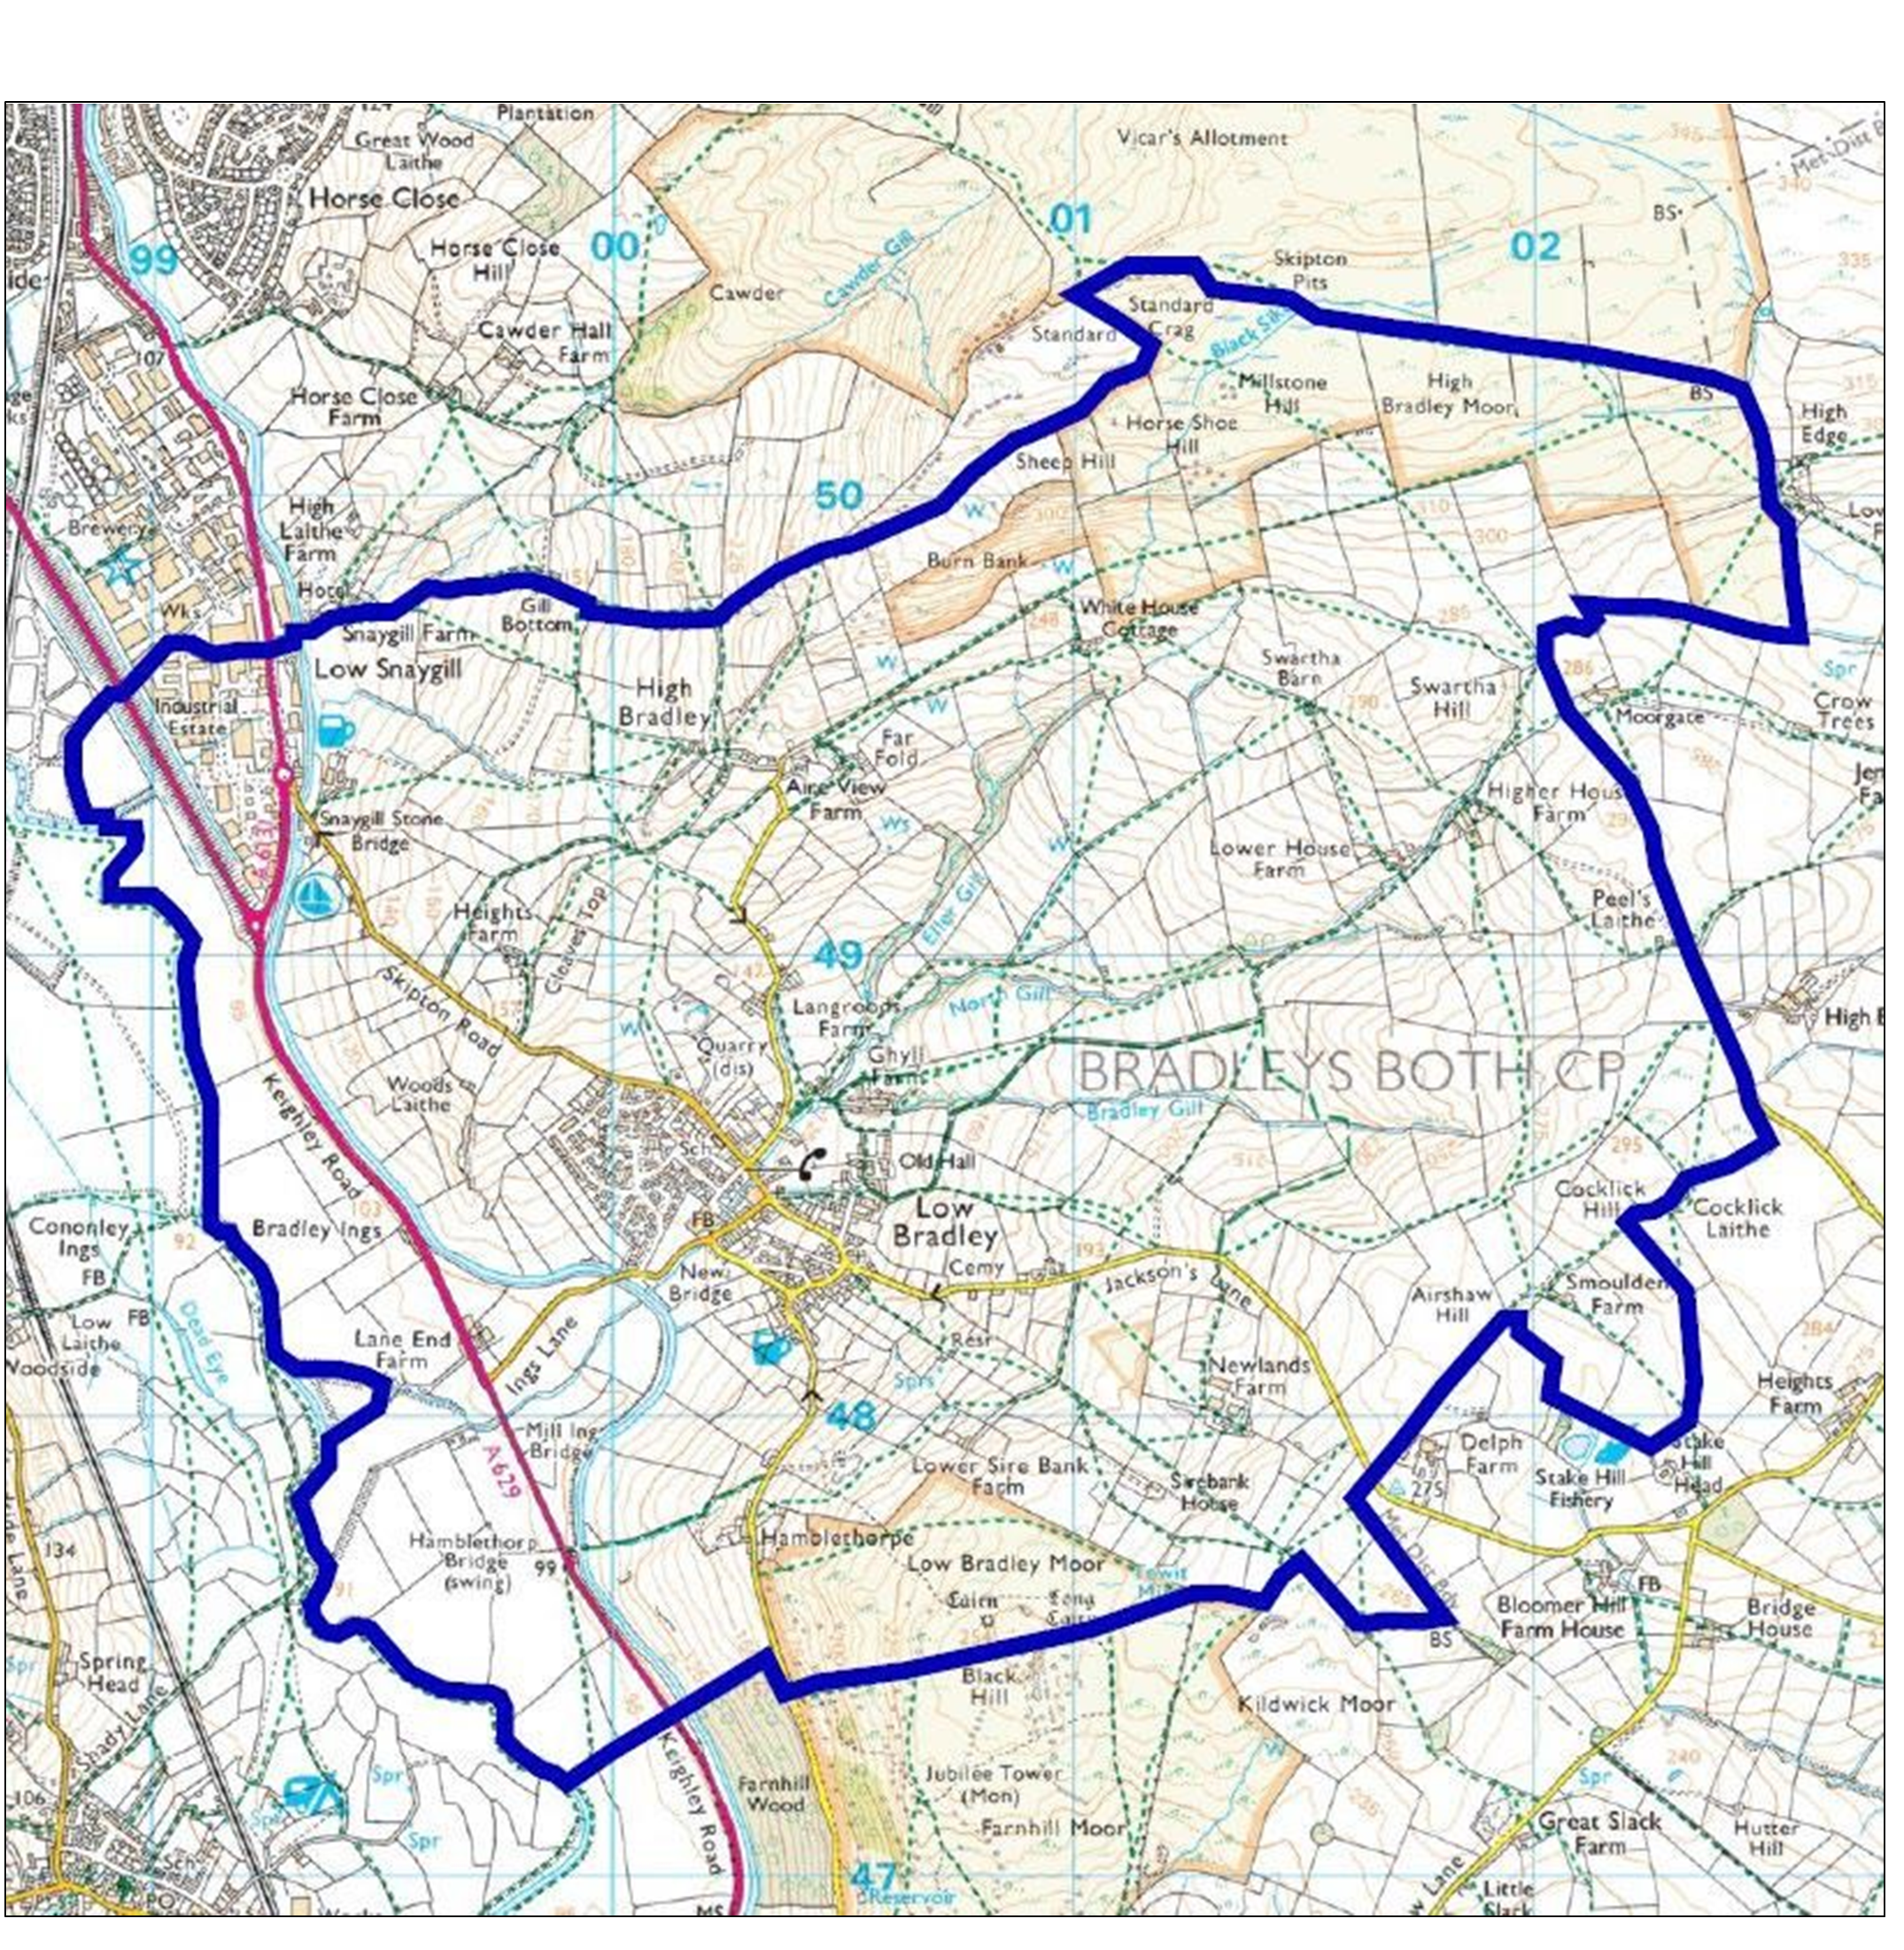 A map showing the Bradleys Both neighbourhood plan area.